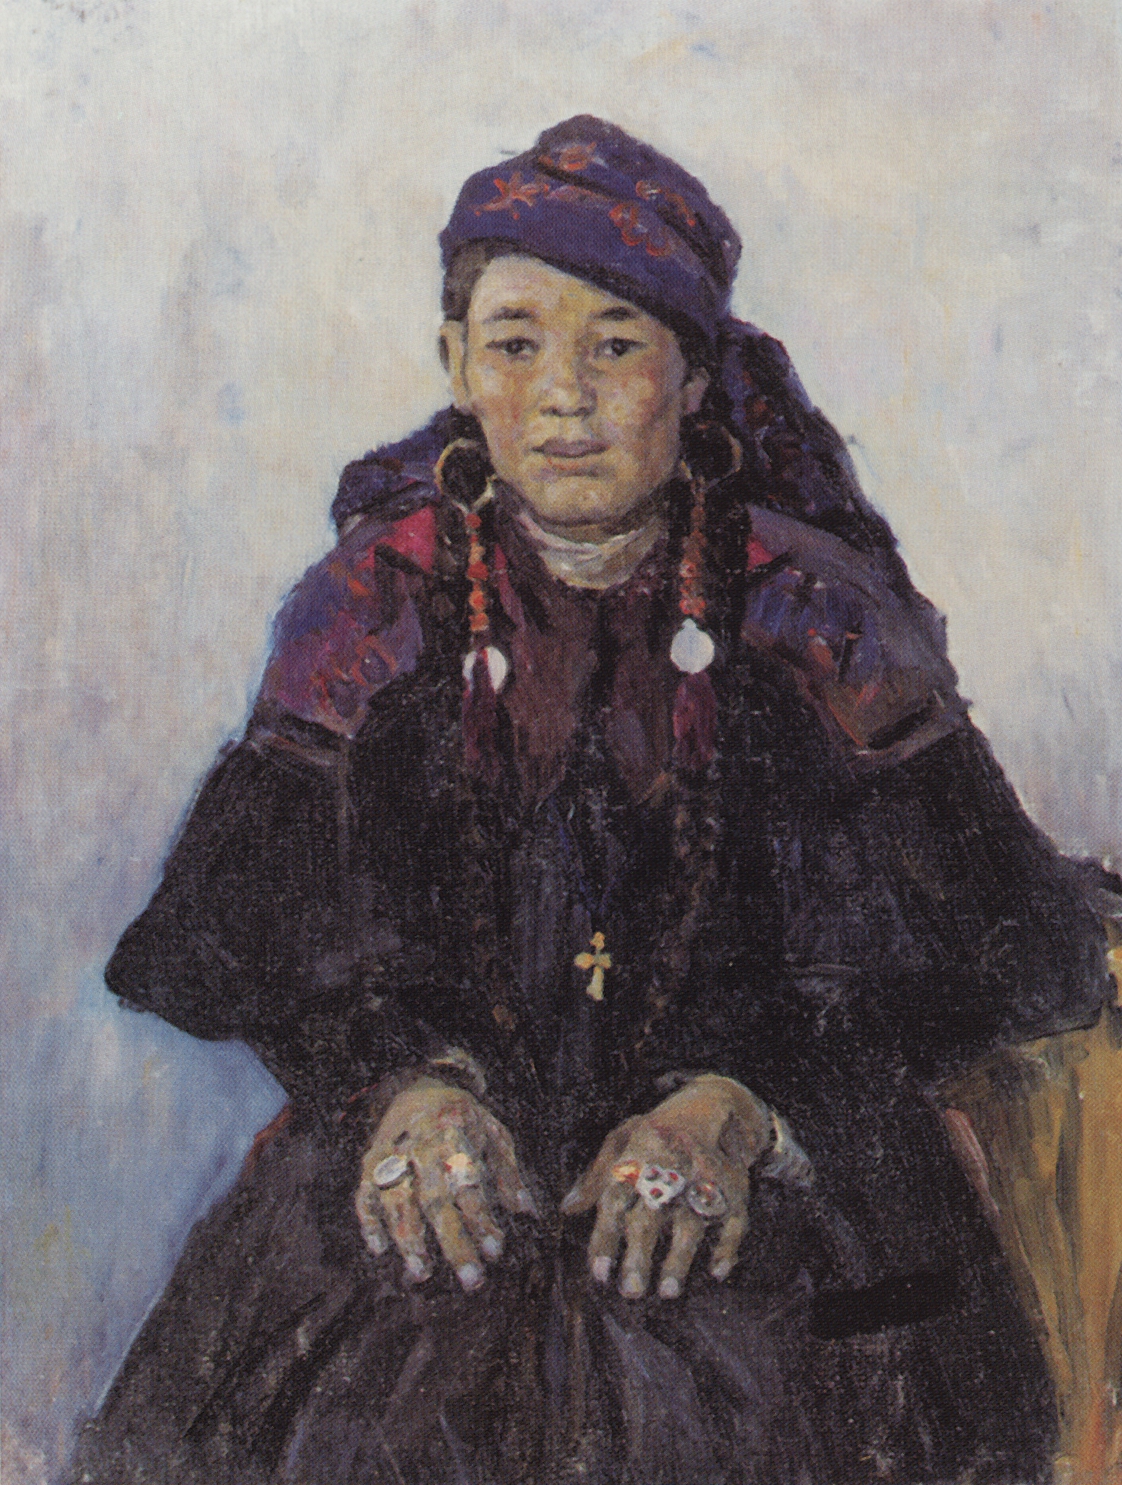 Суриков. Портрет хакаски. 1909